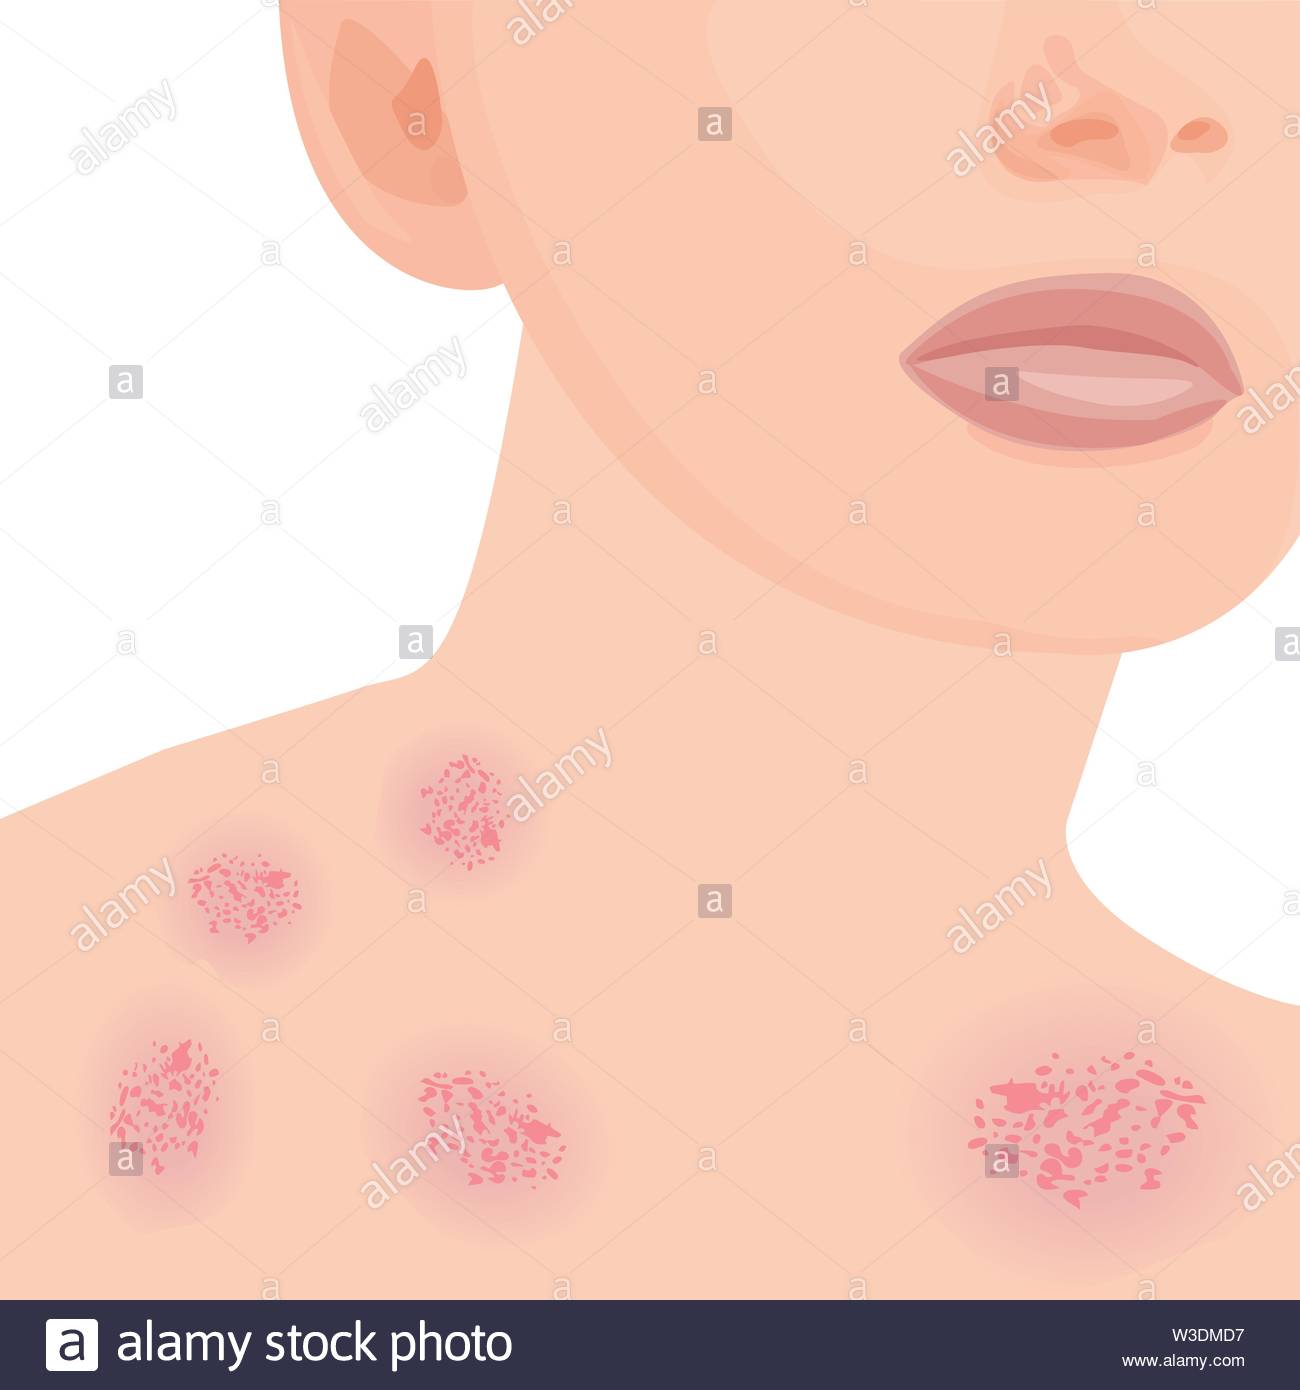 Eczema Affected A Body Dermatology Skin Disease Concept Vector